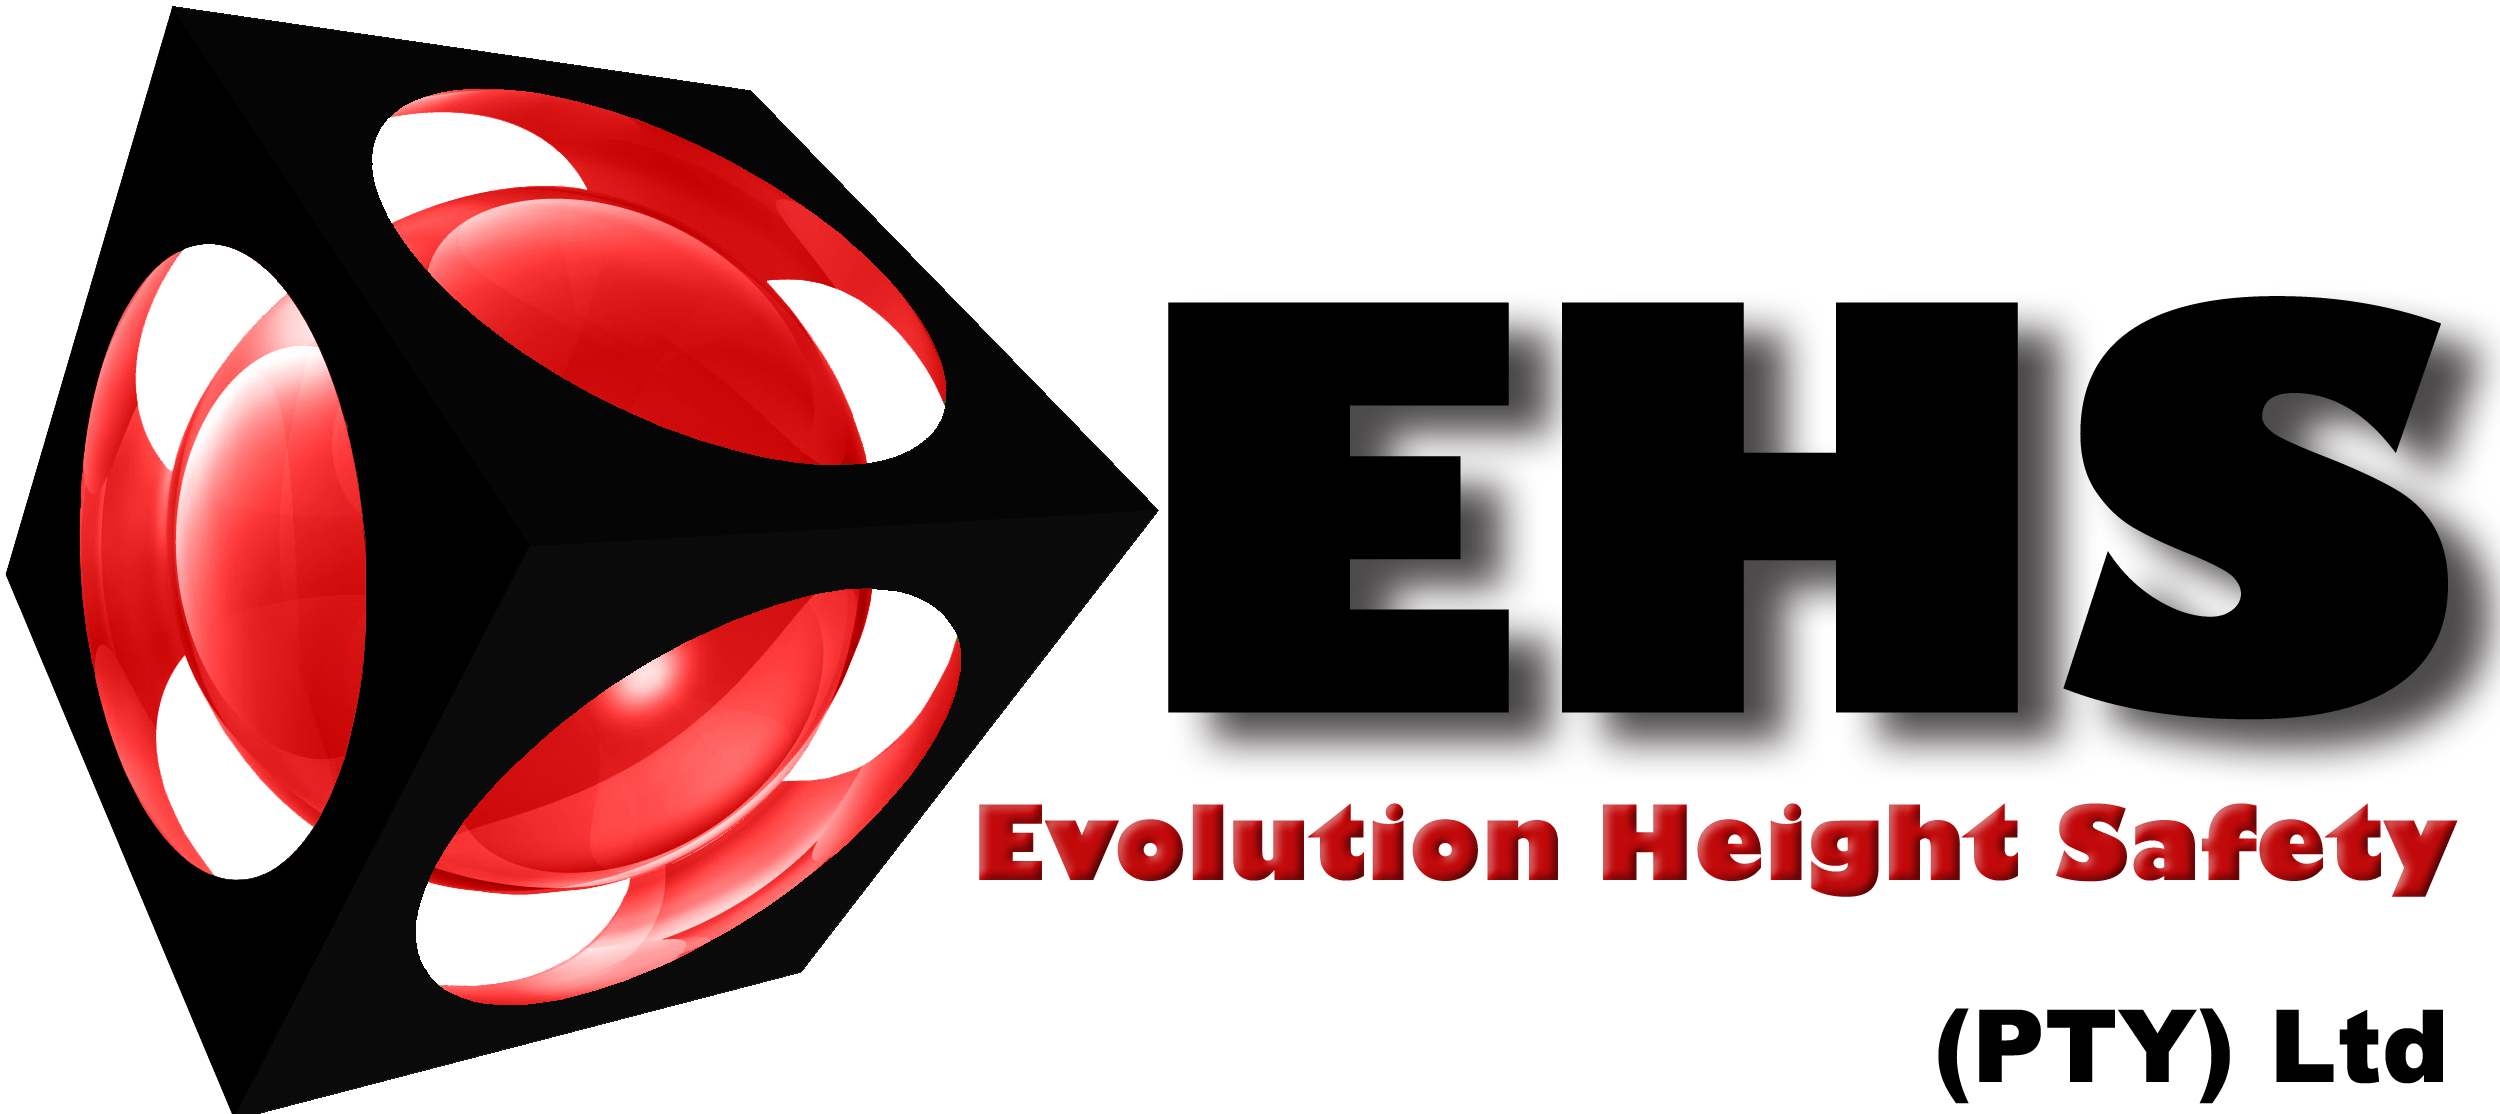 Evolution Height Safety CC logo